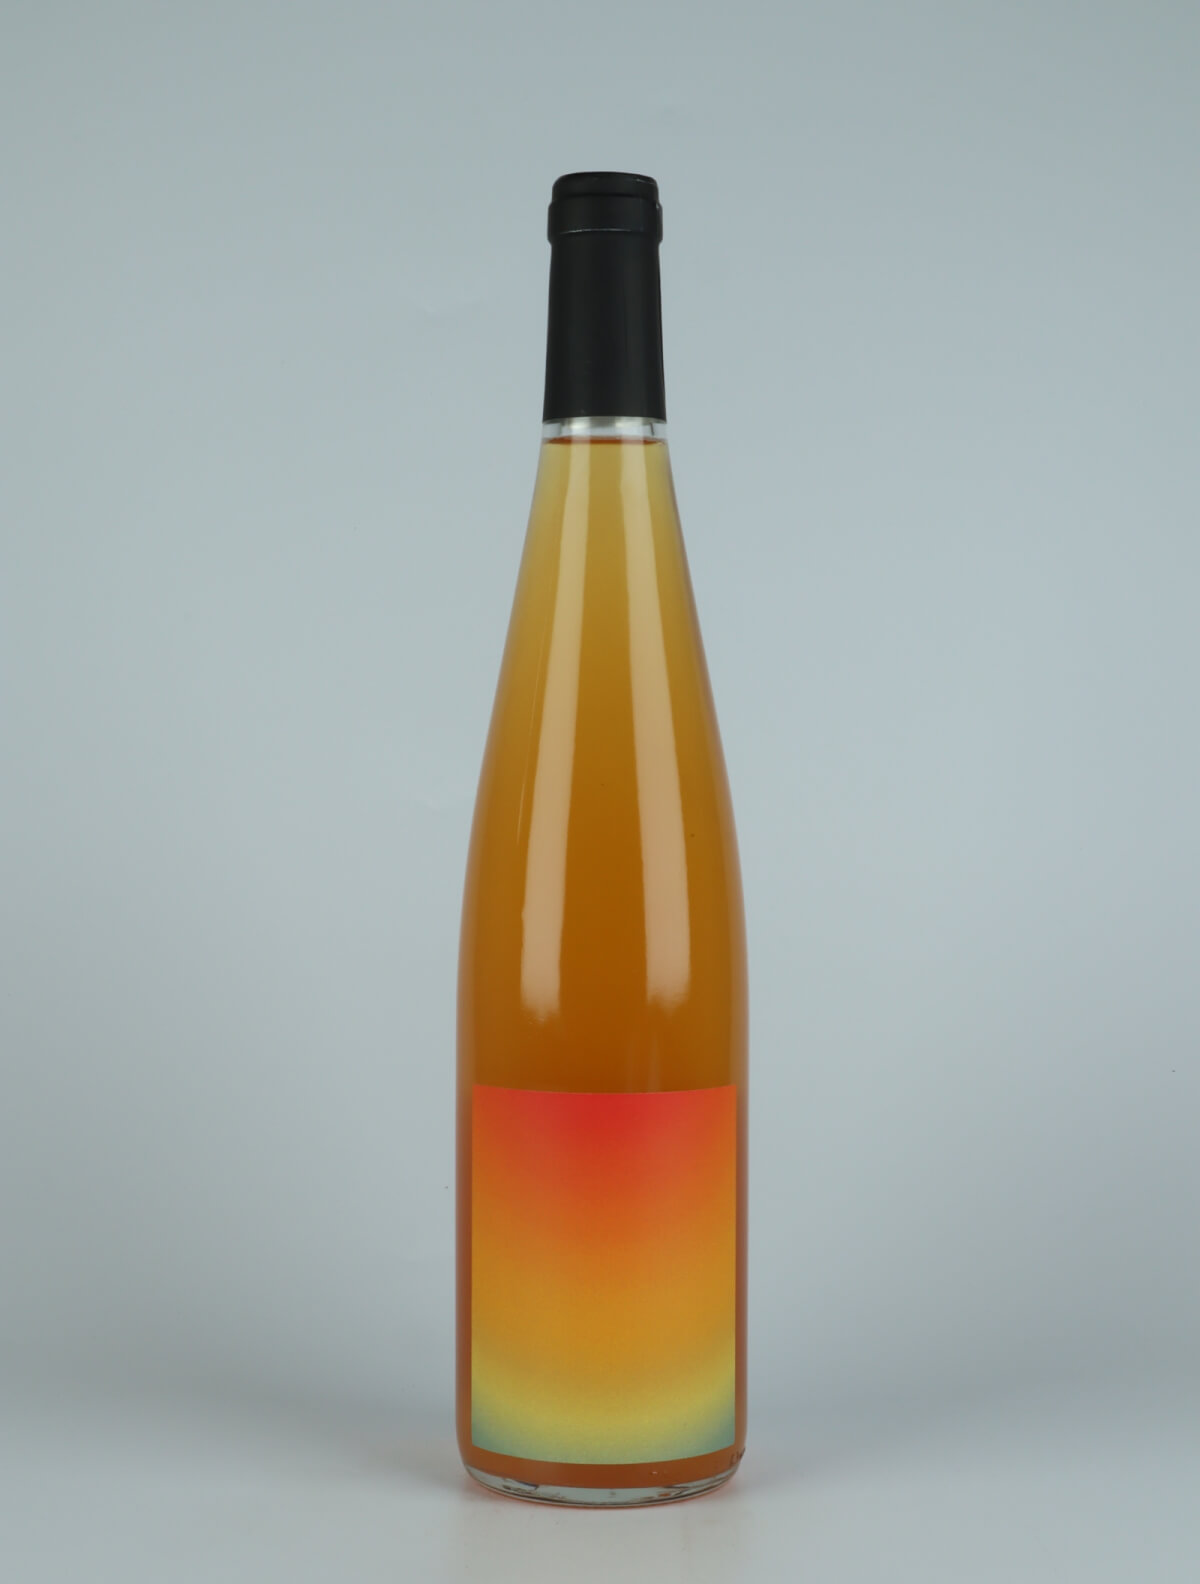 A bottle 2021 Frénétique Orange wine from Domaine Goepp, Alsace in France